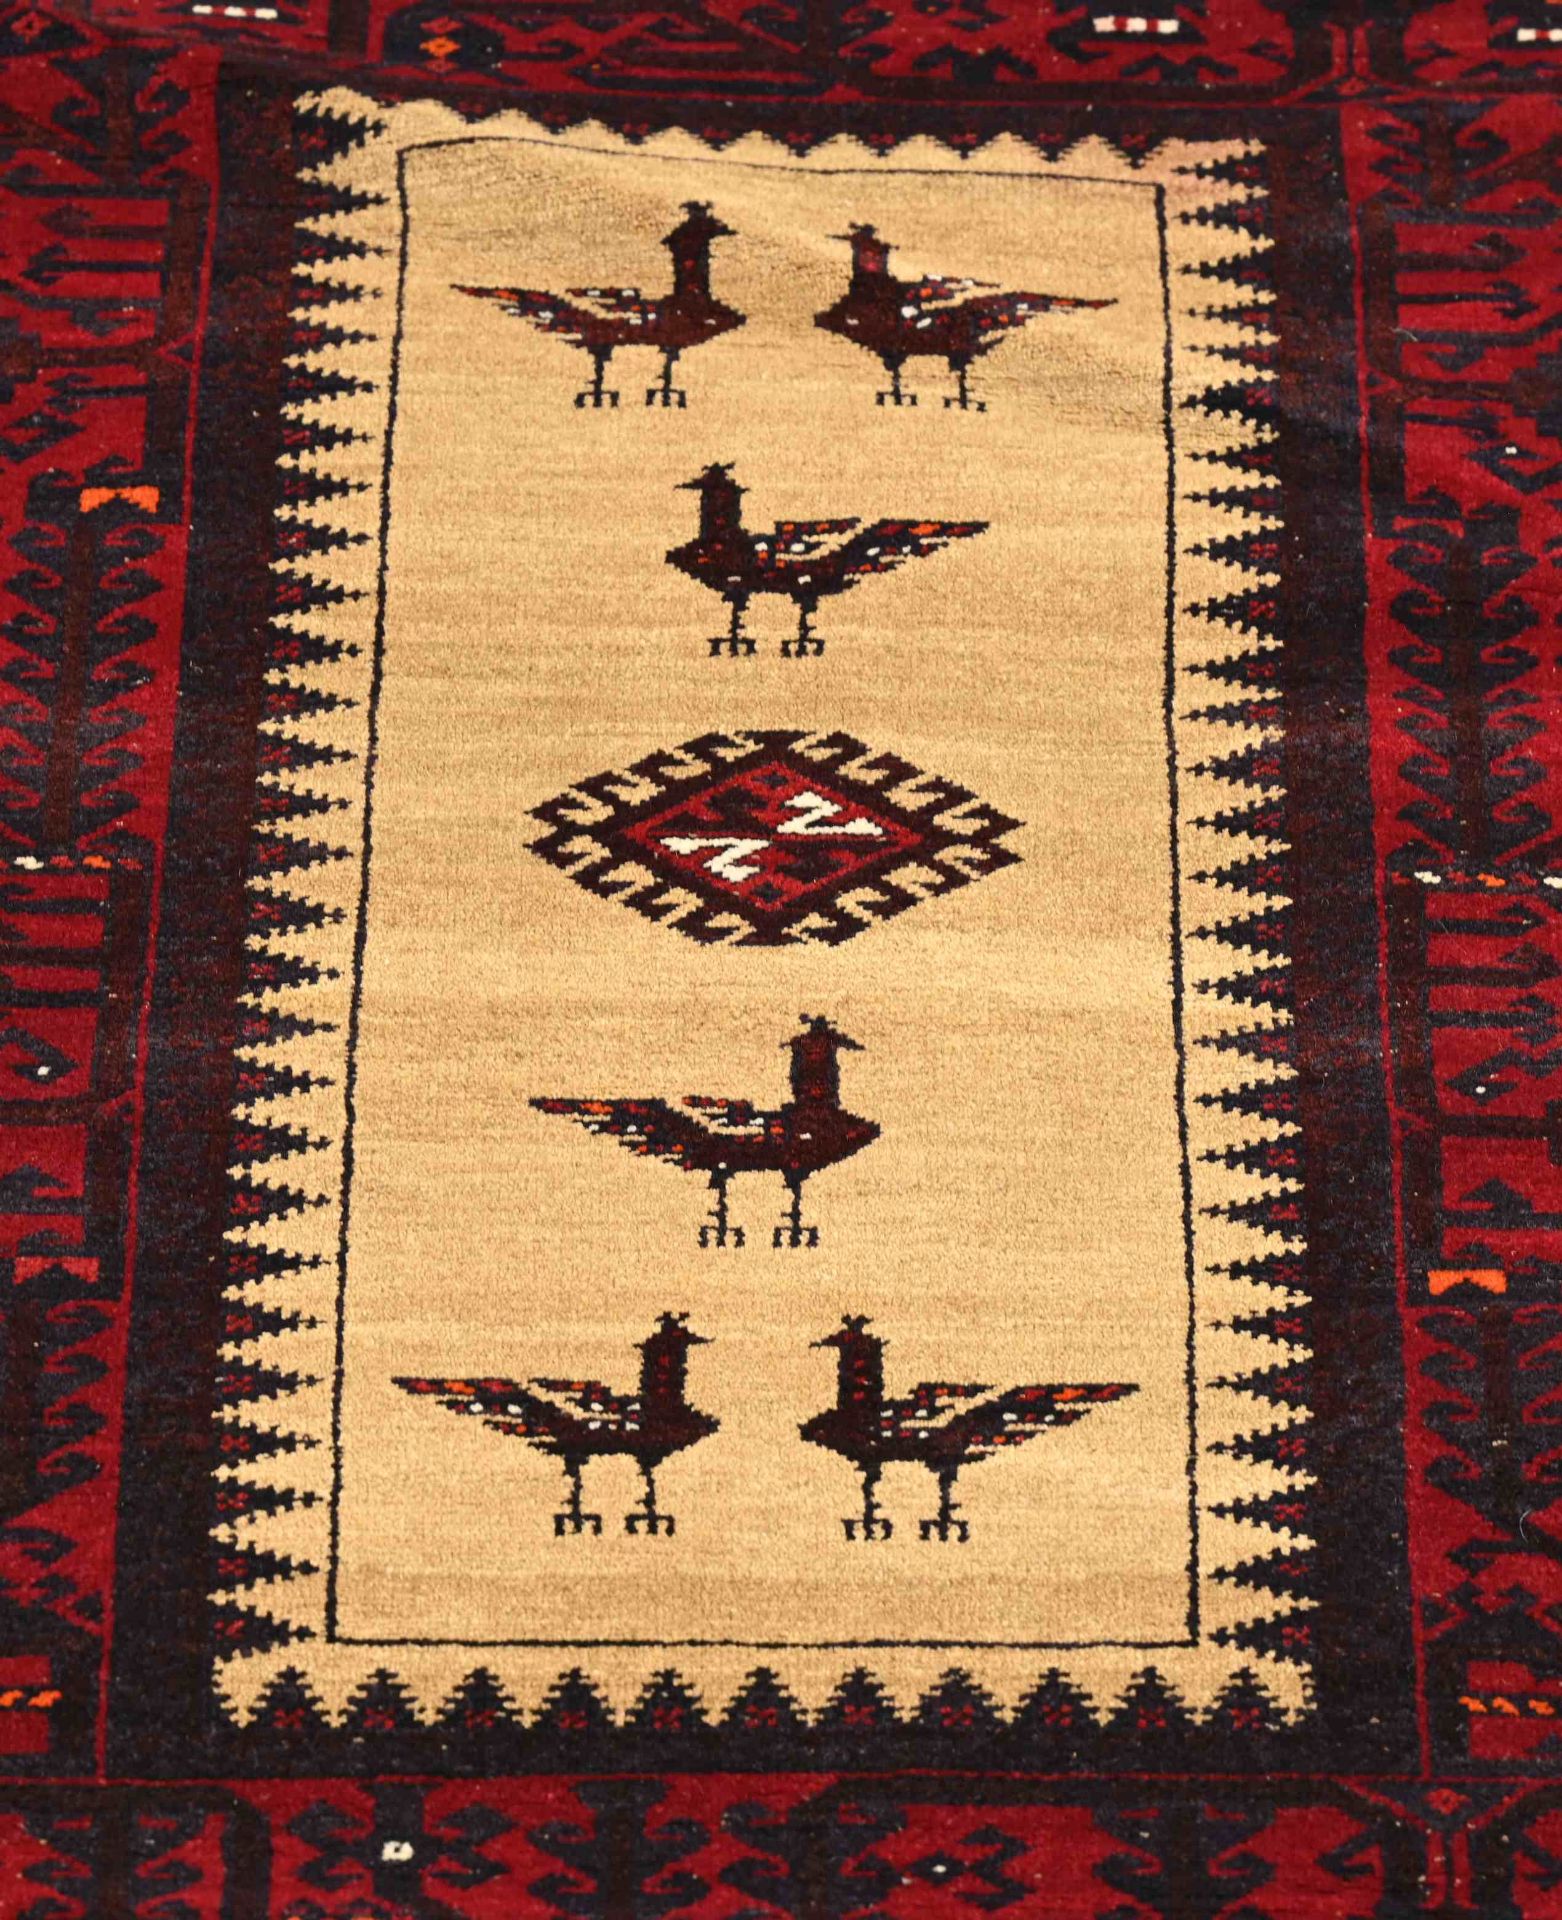 Old Persian prayer rug, 146 x 80 cm. - Image 2 of 2